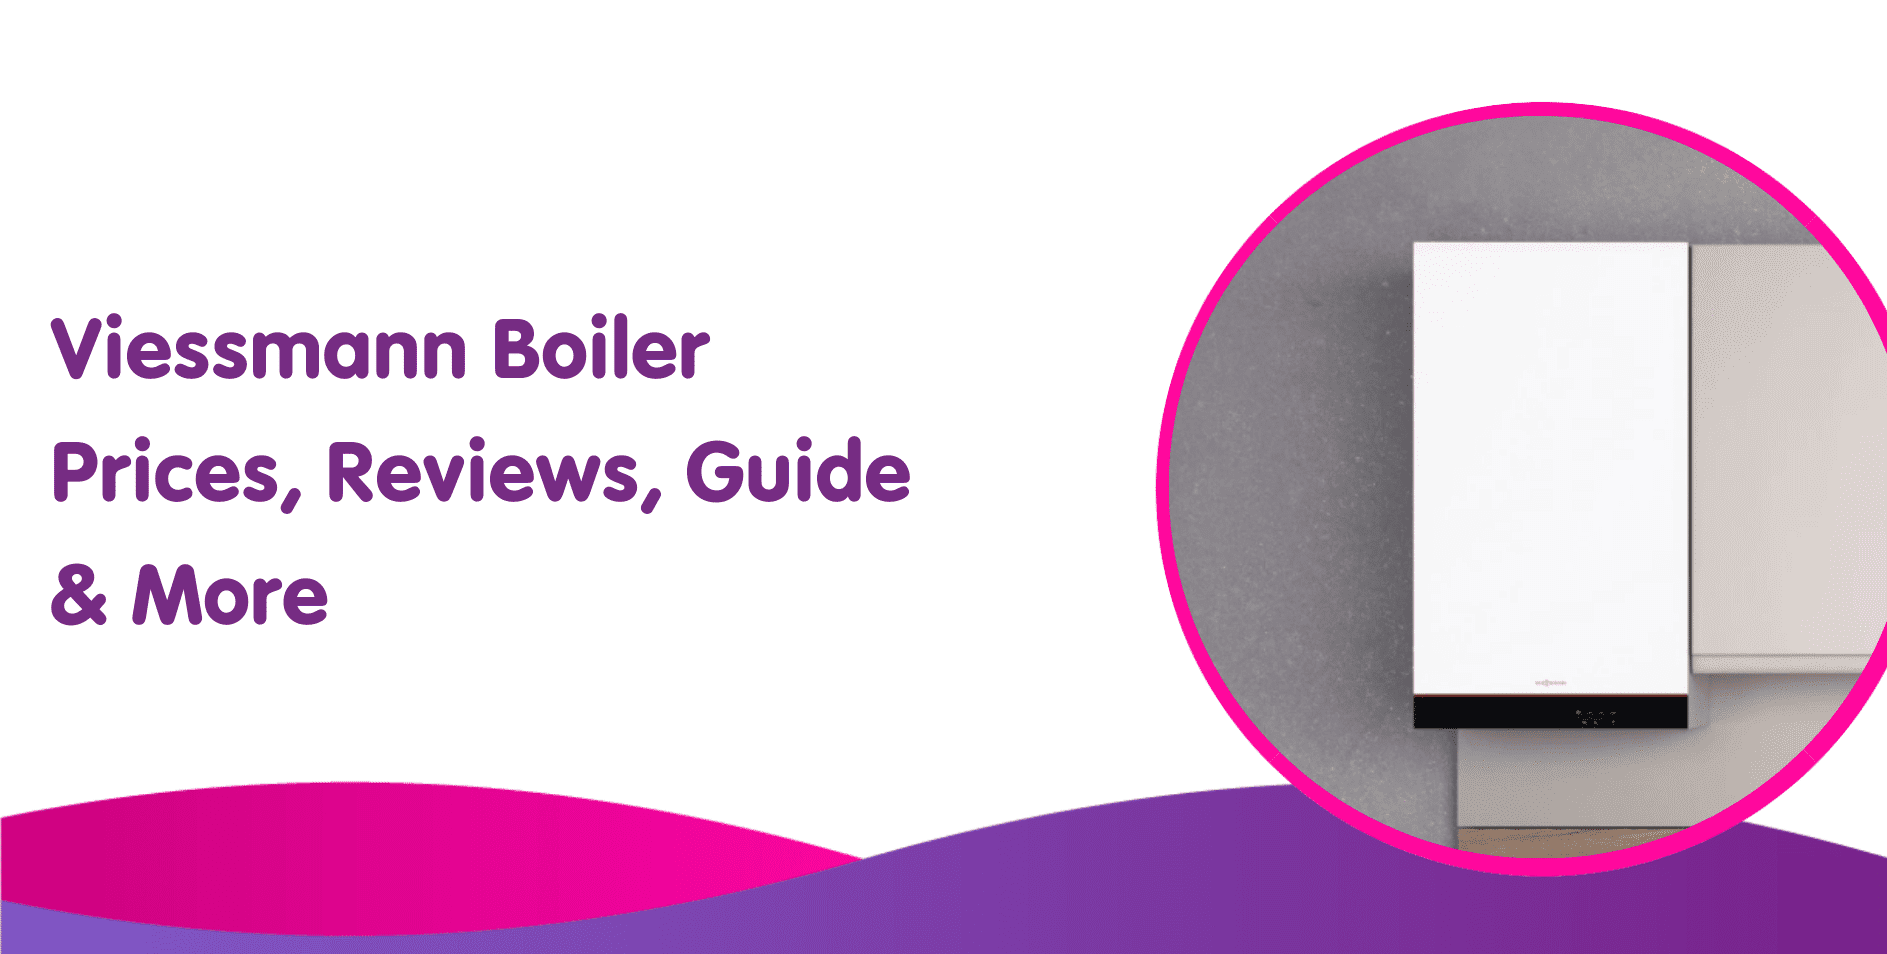 Viessmann Boiler Prices, Reviews, Guide & More